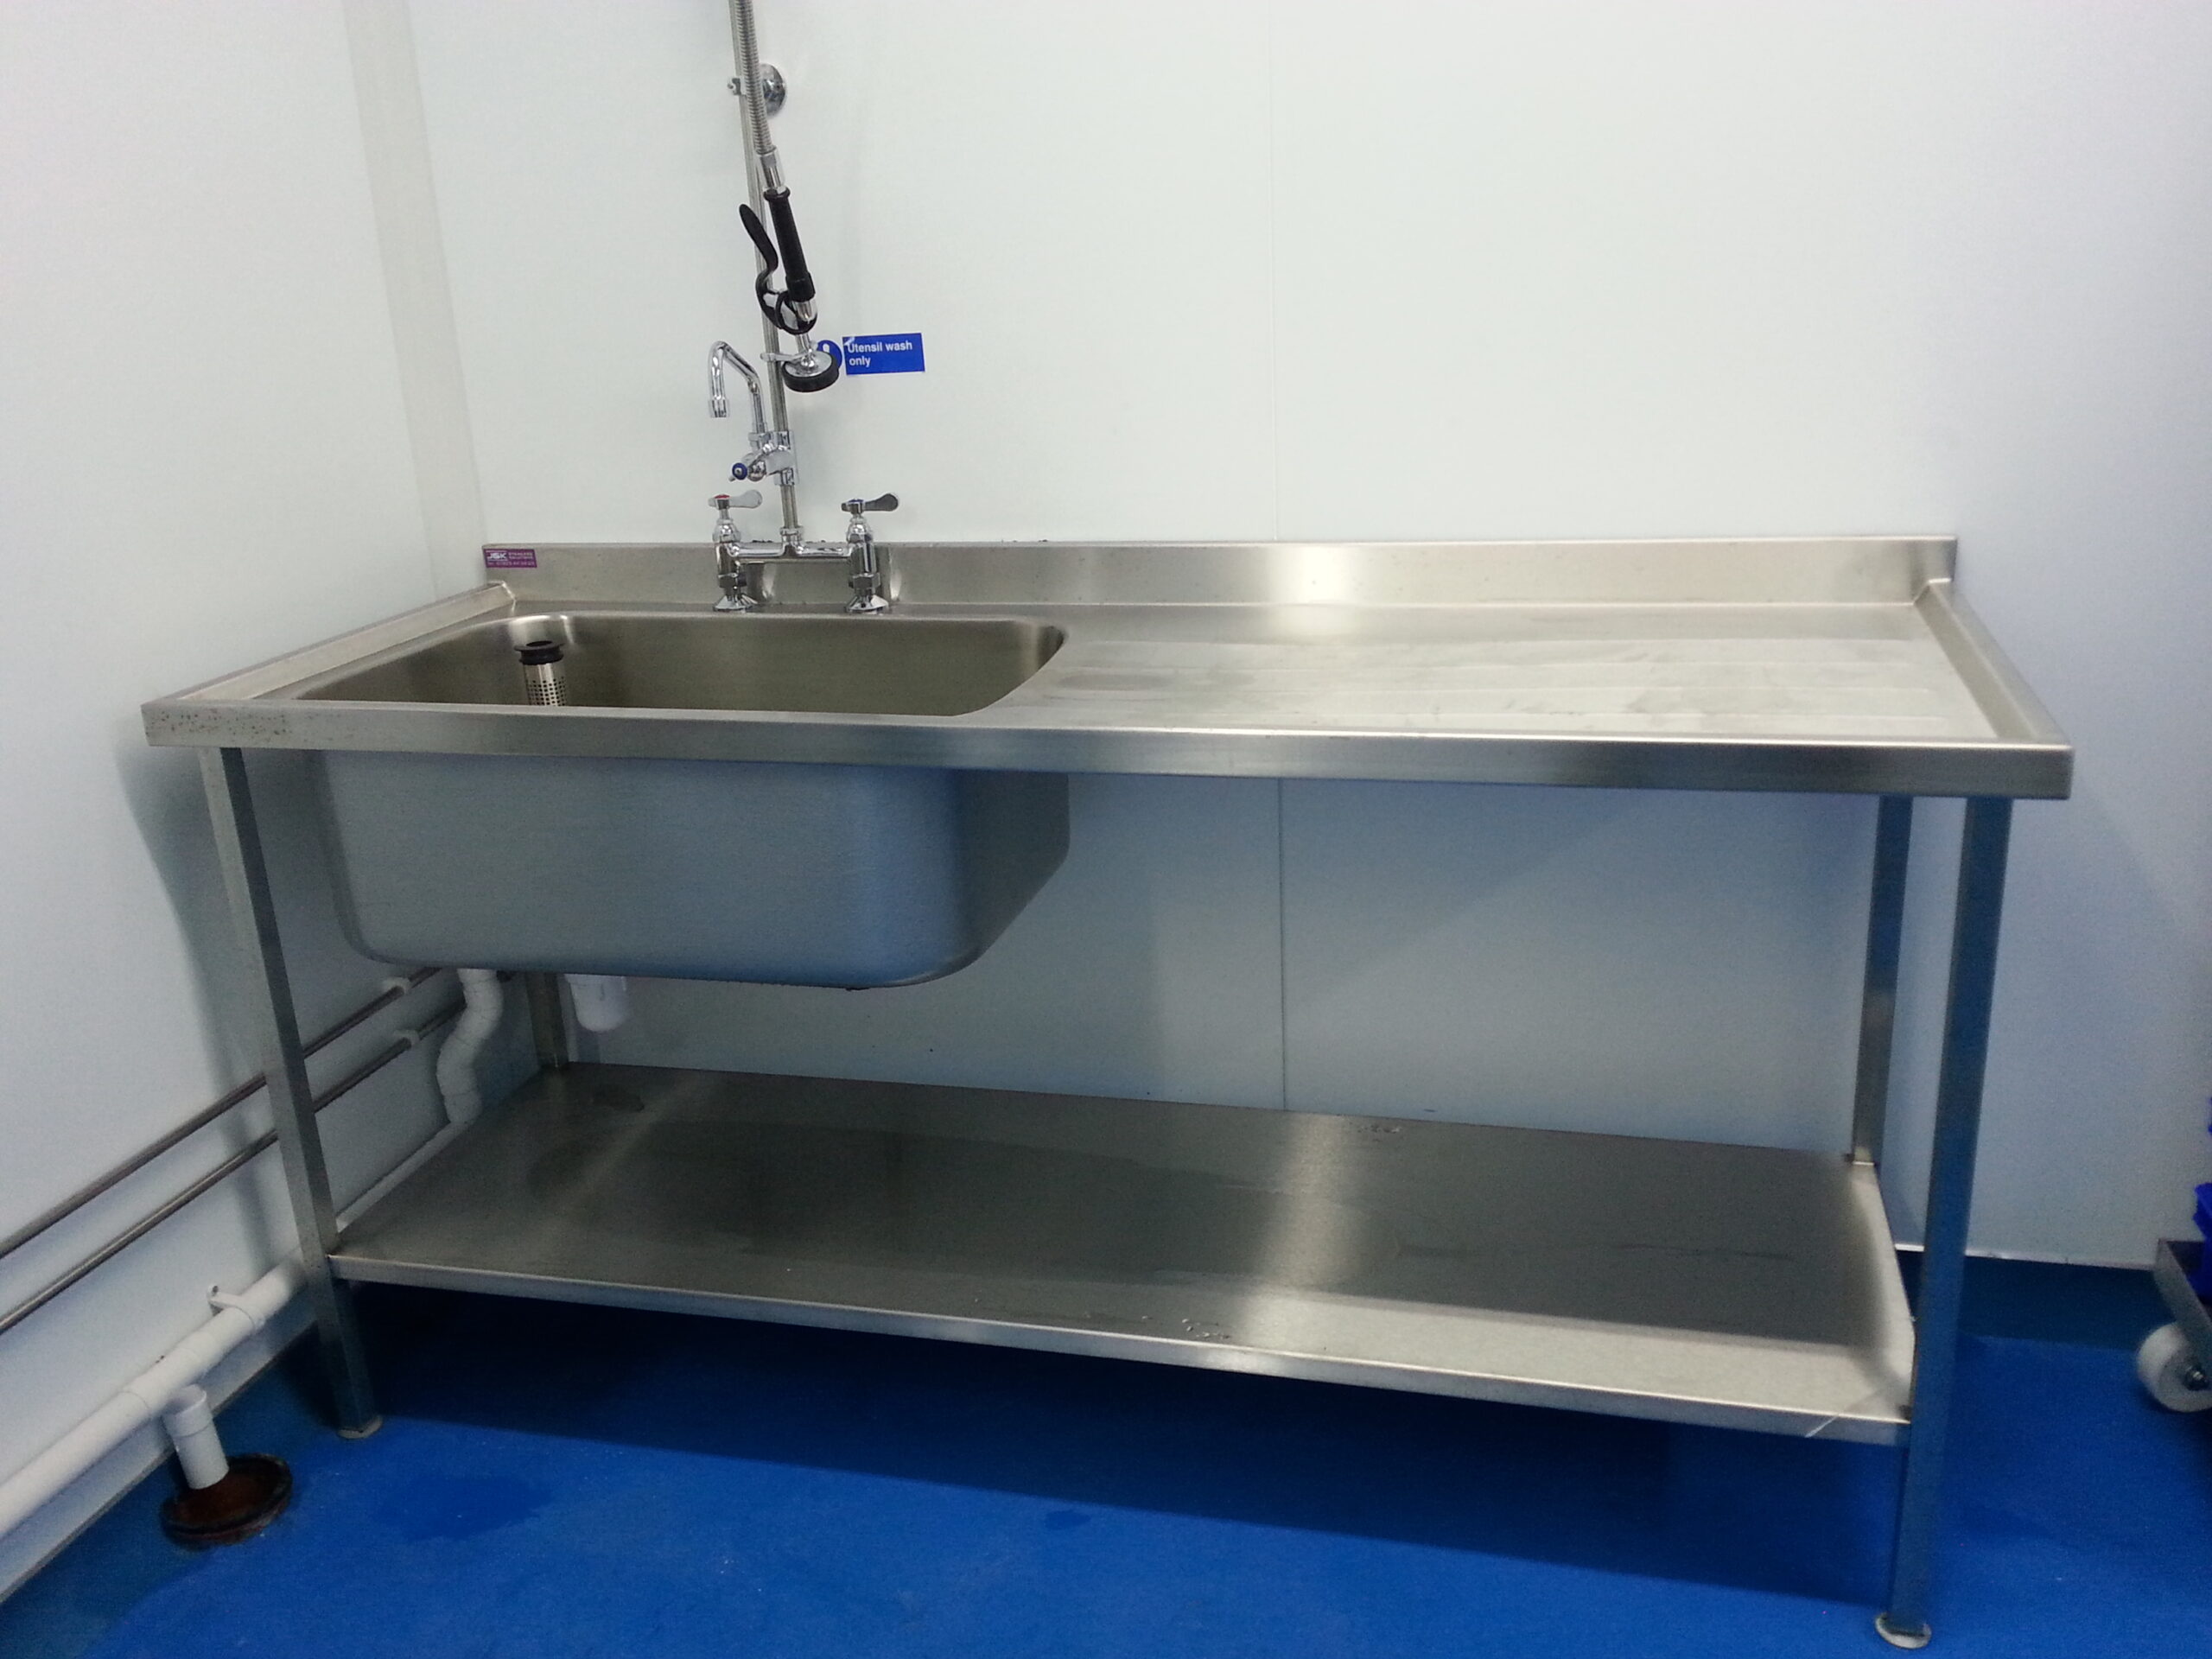 commerical kitchen 3 bay sink